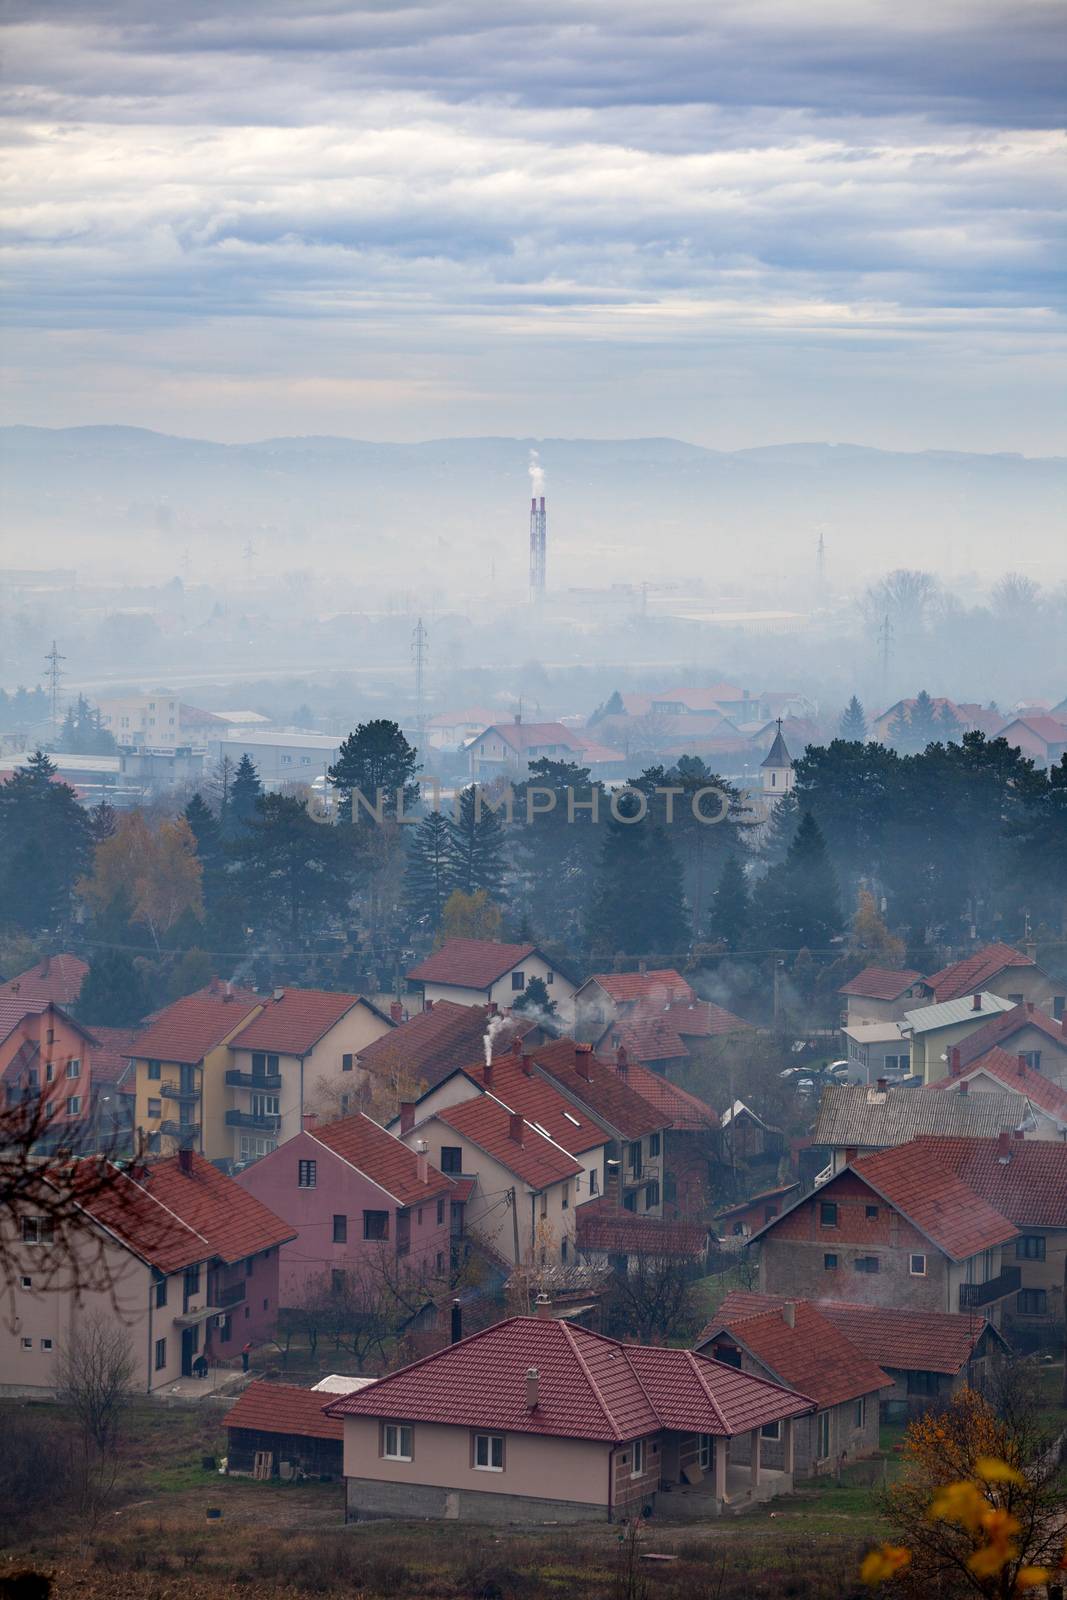 Fog, smog and smoke in Air pollution - Valjevo, West Serbia, Eur by adamr